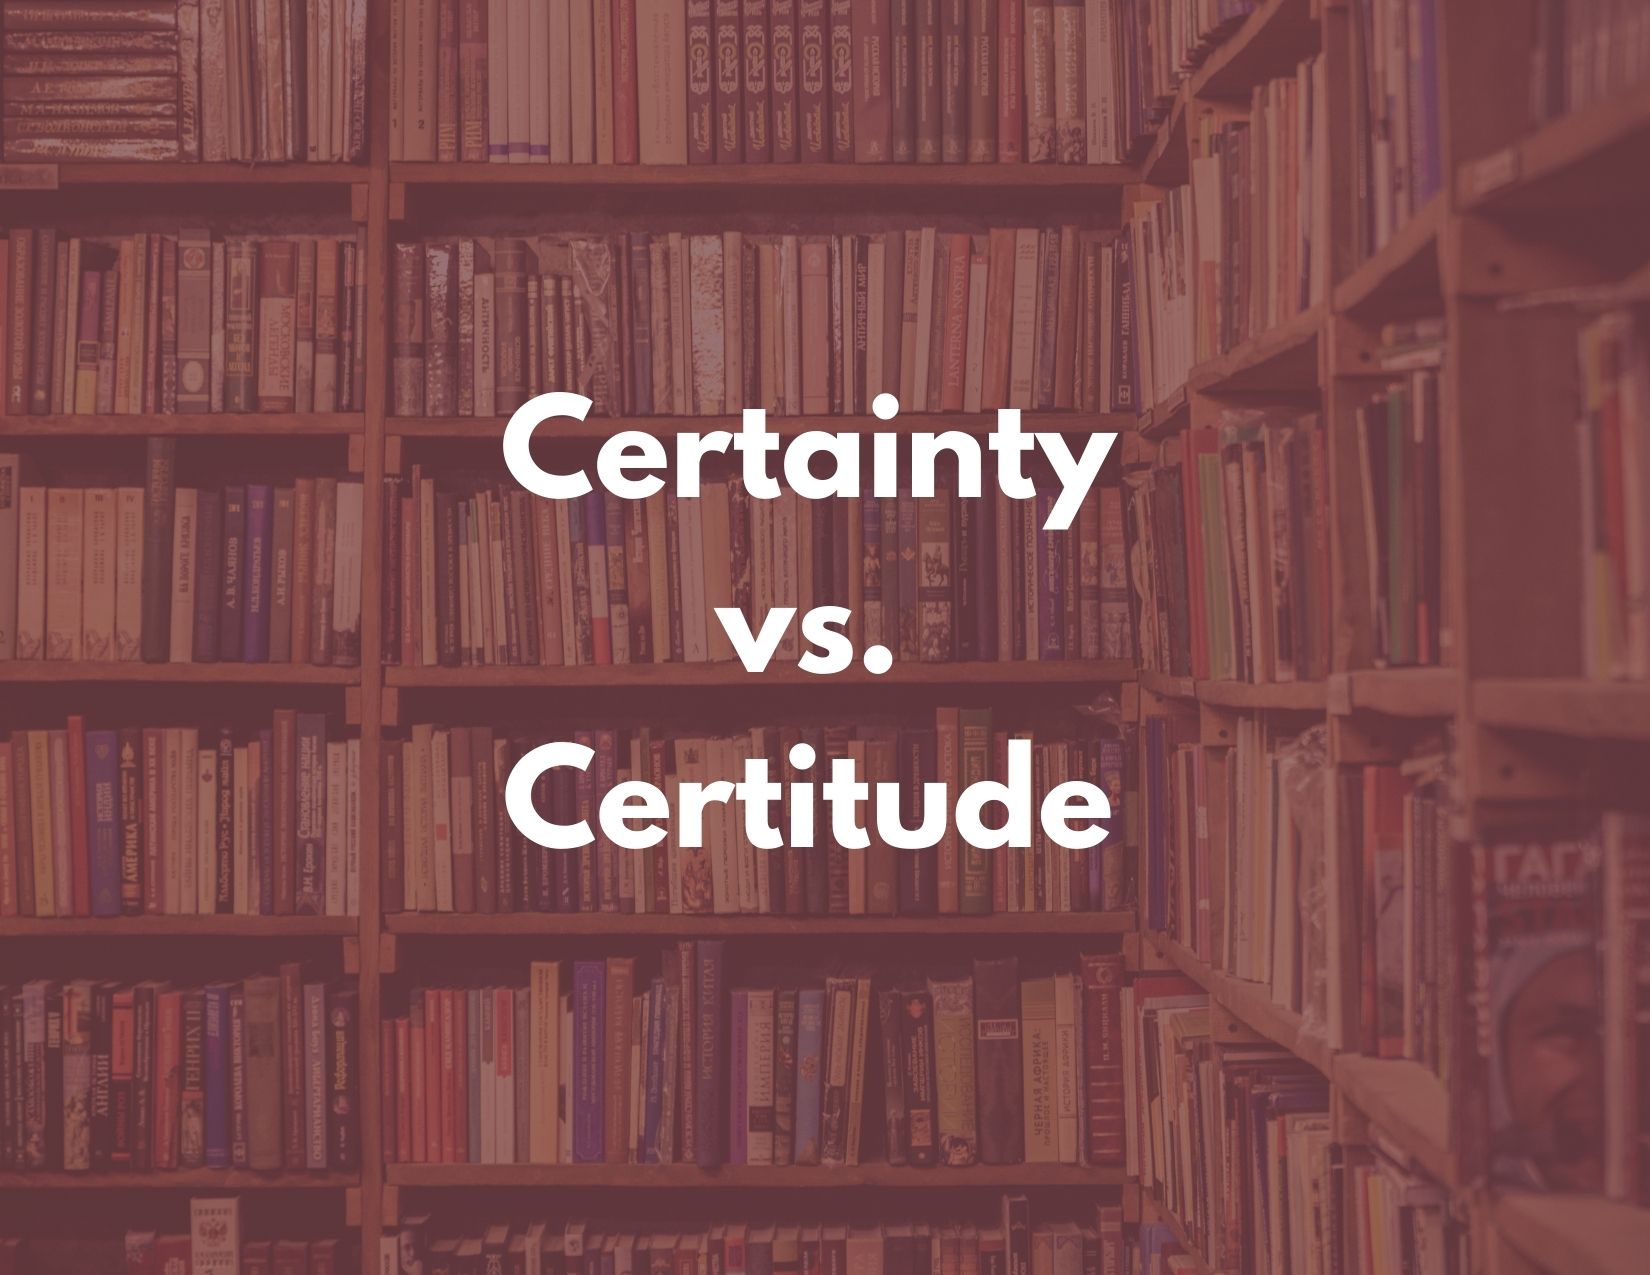 Certainty vs. Certitude written over a graphic of a book shelf